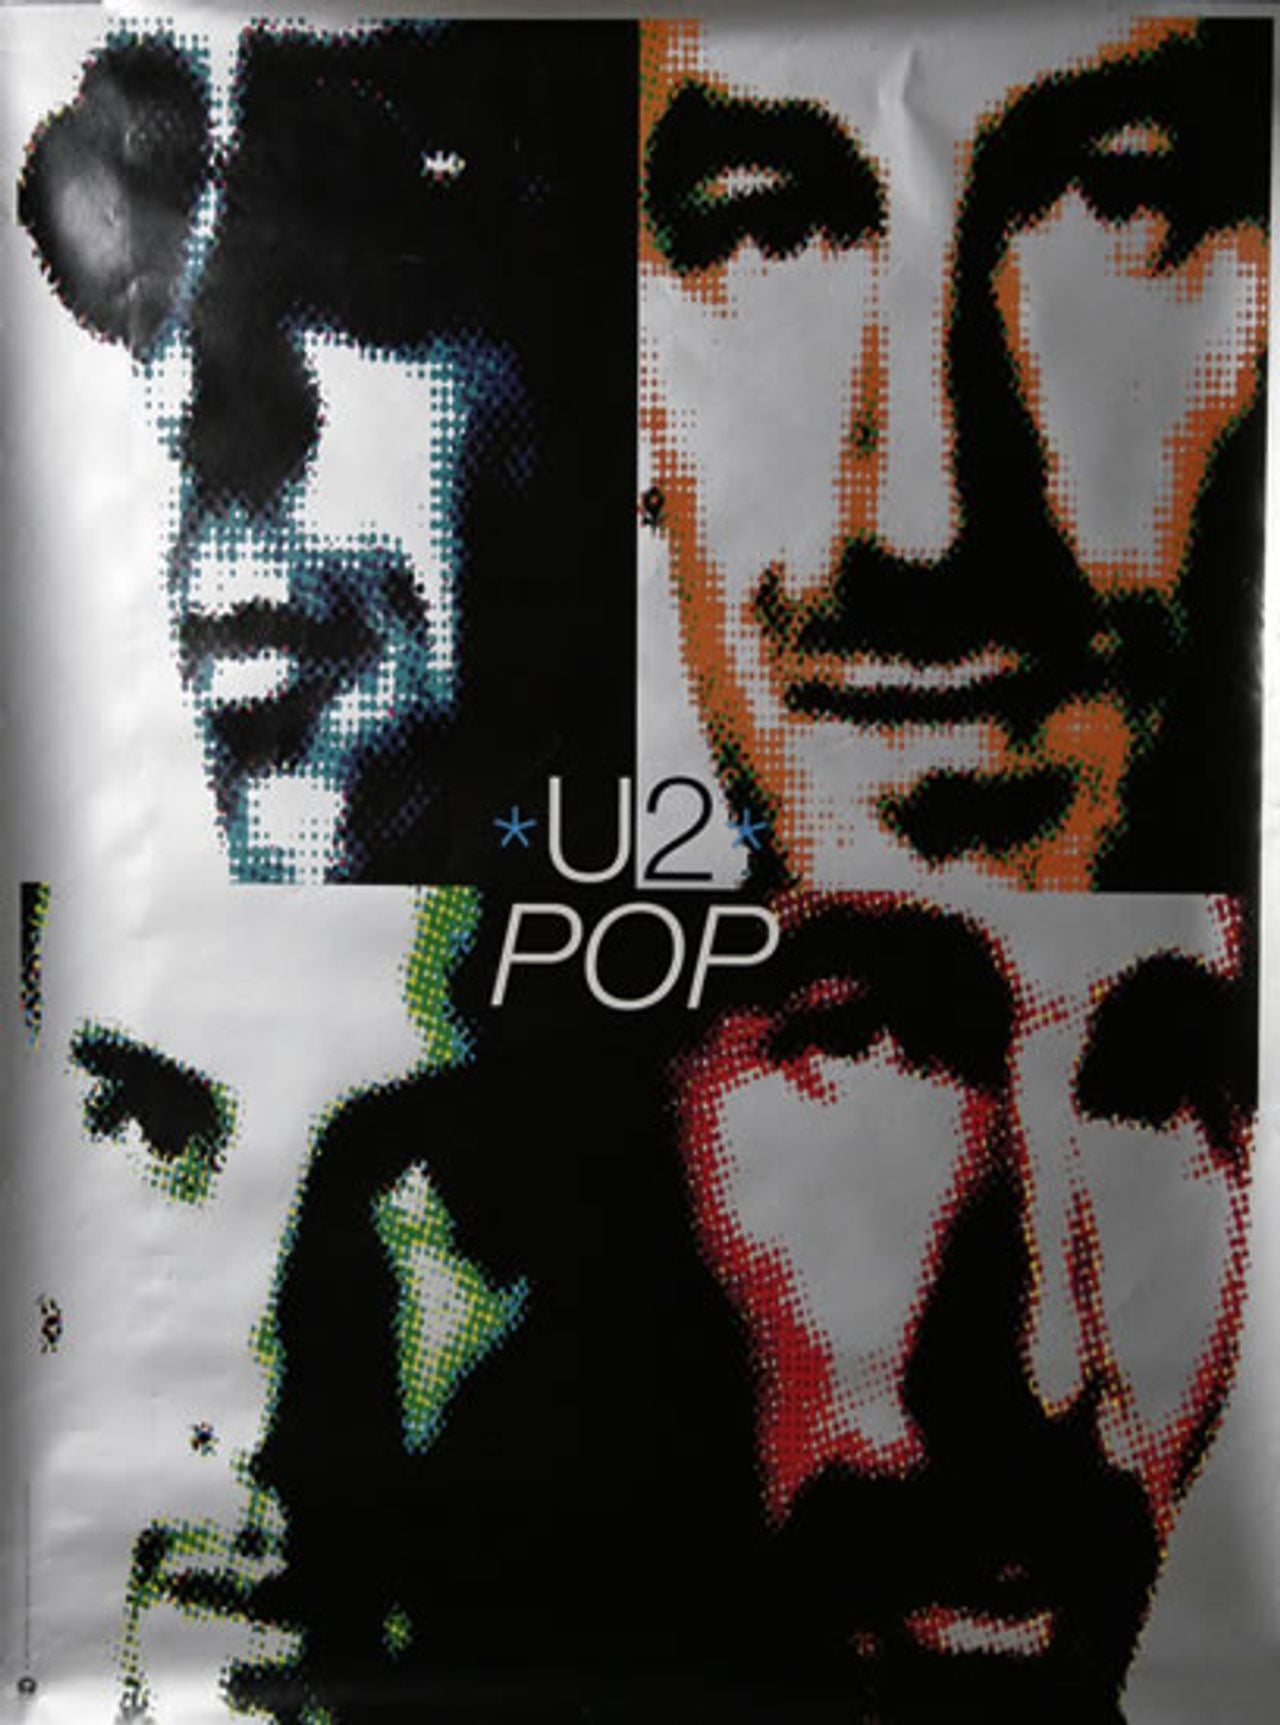 U2 Goes Pop